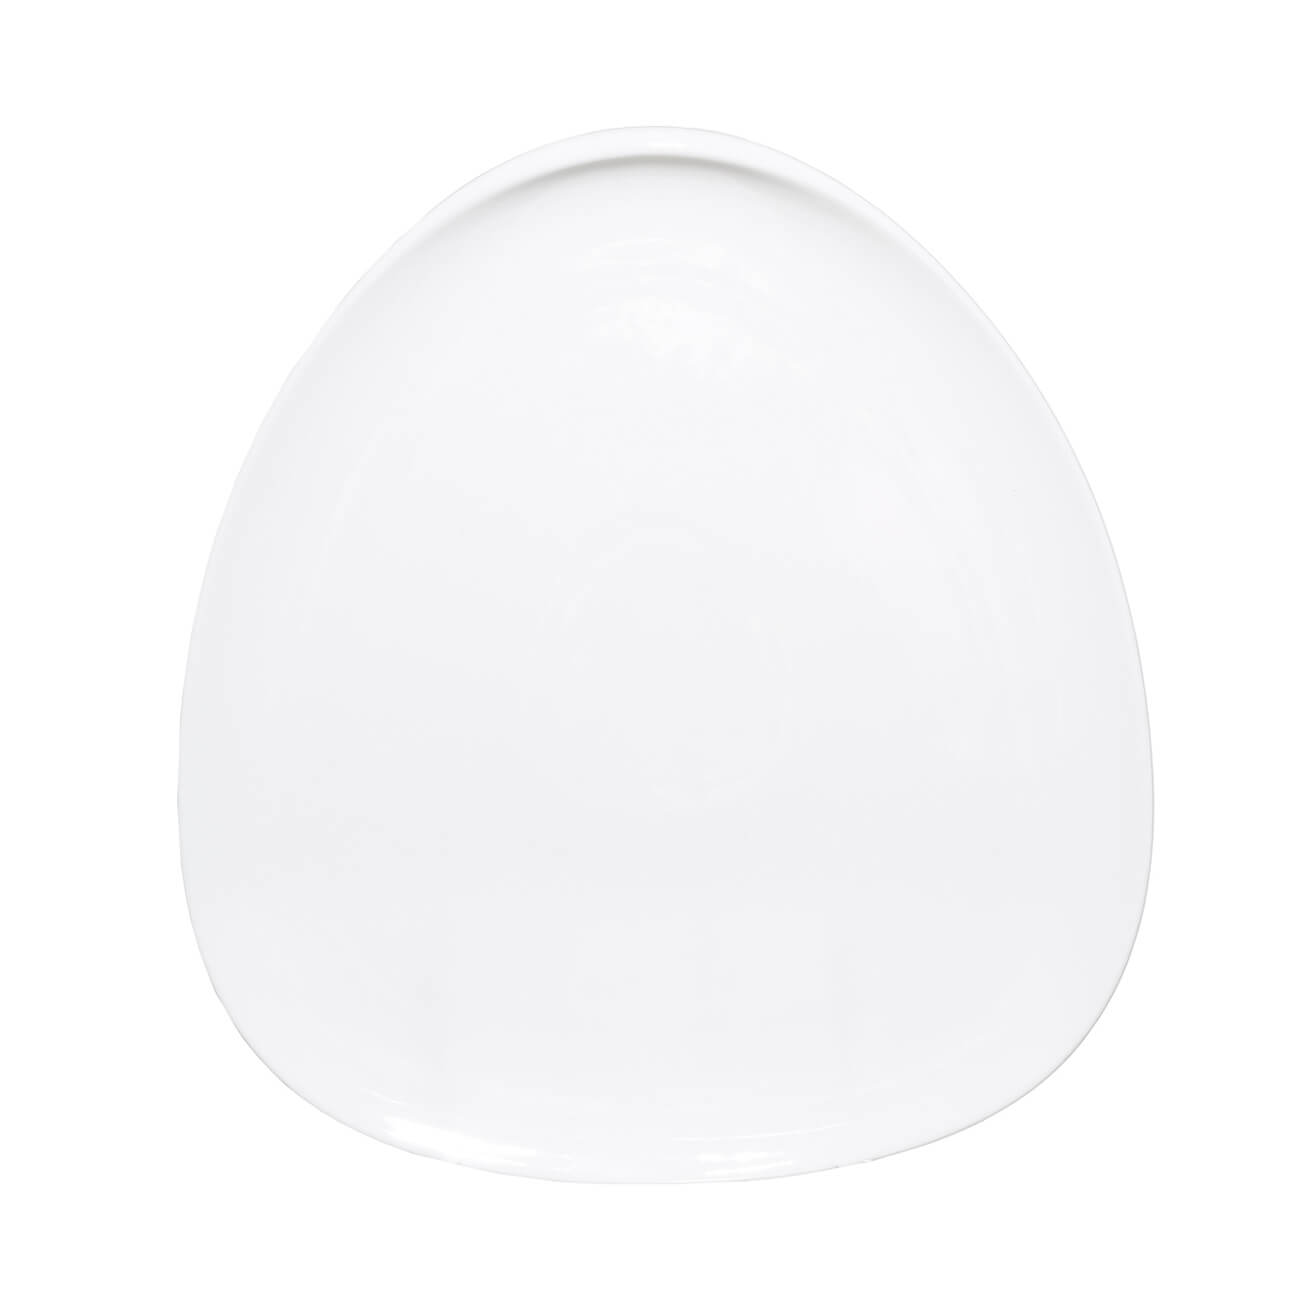 Тарелка закусочная, 23х21 см, фарфор P, белая, Synergy тарелка magistro milk d 20 см акация